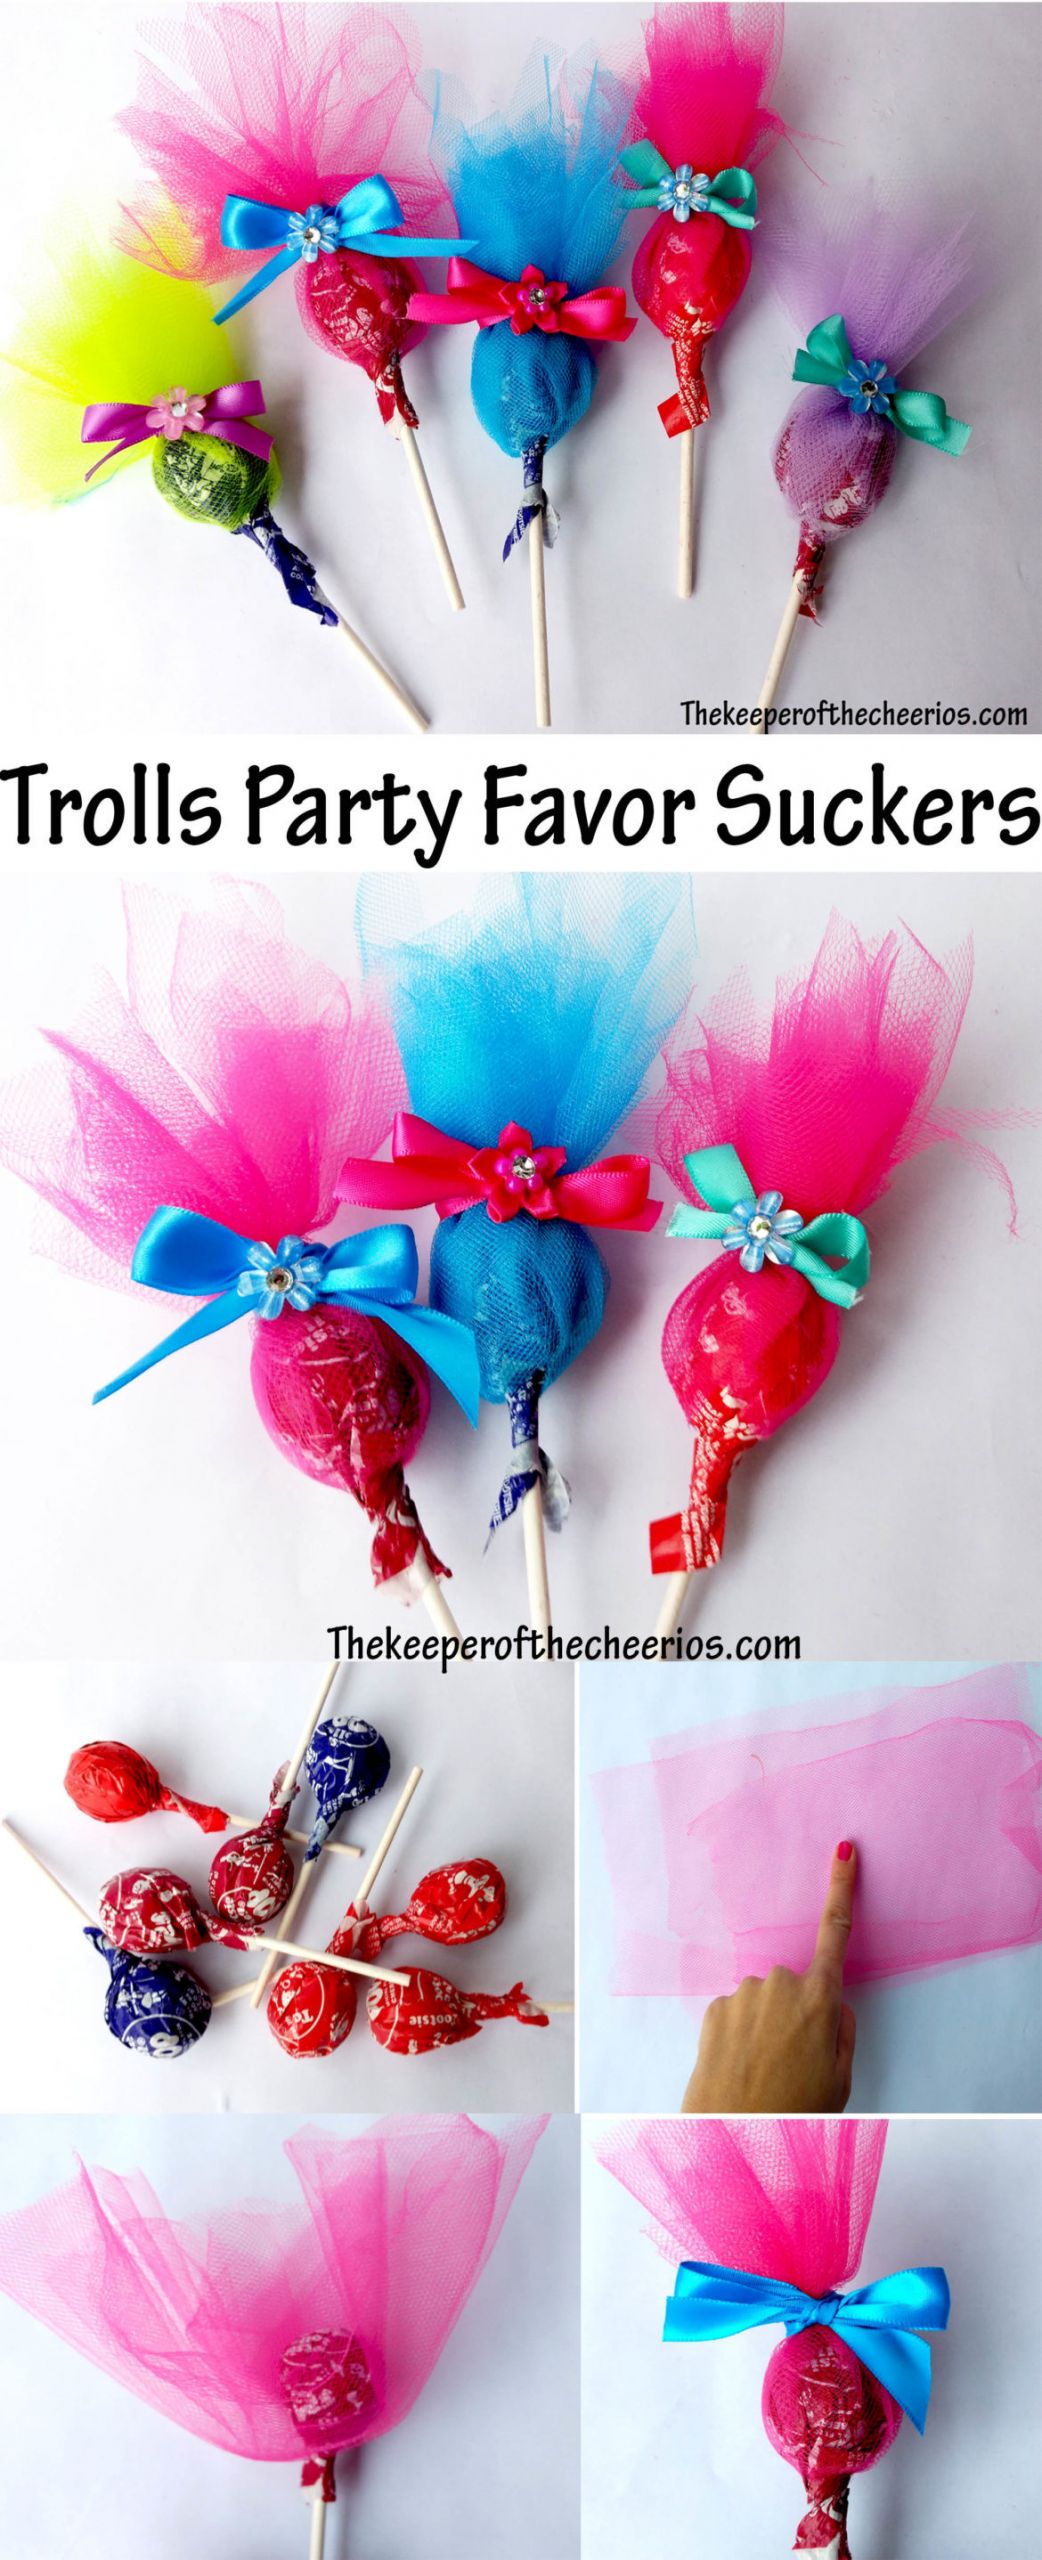 Trolls Party Ideas Diy
 Trolls Party Favor Suckers